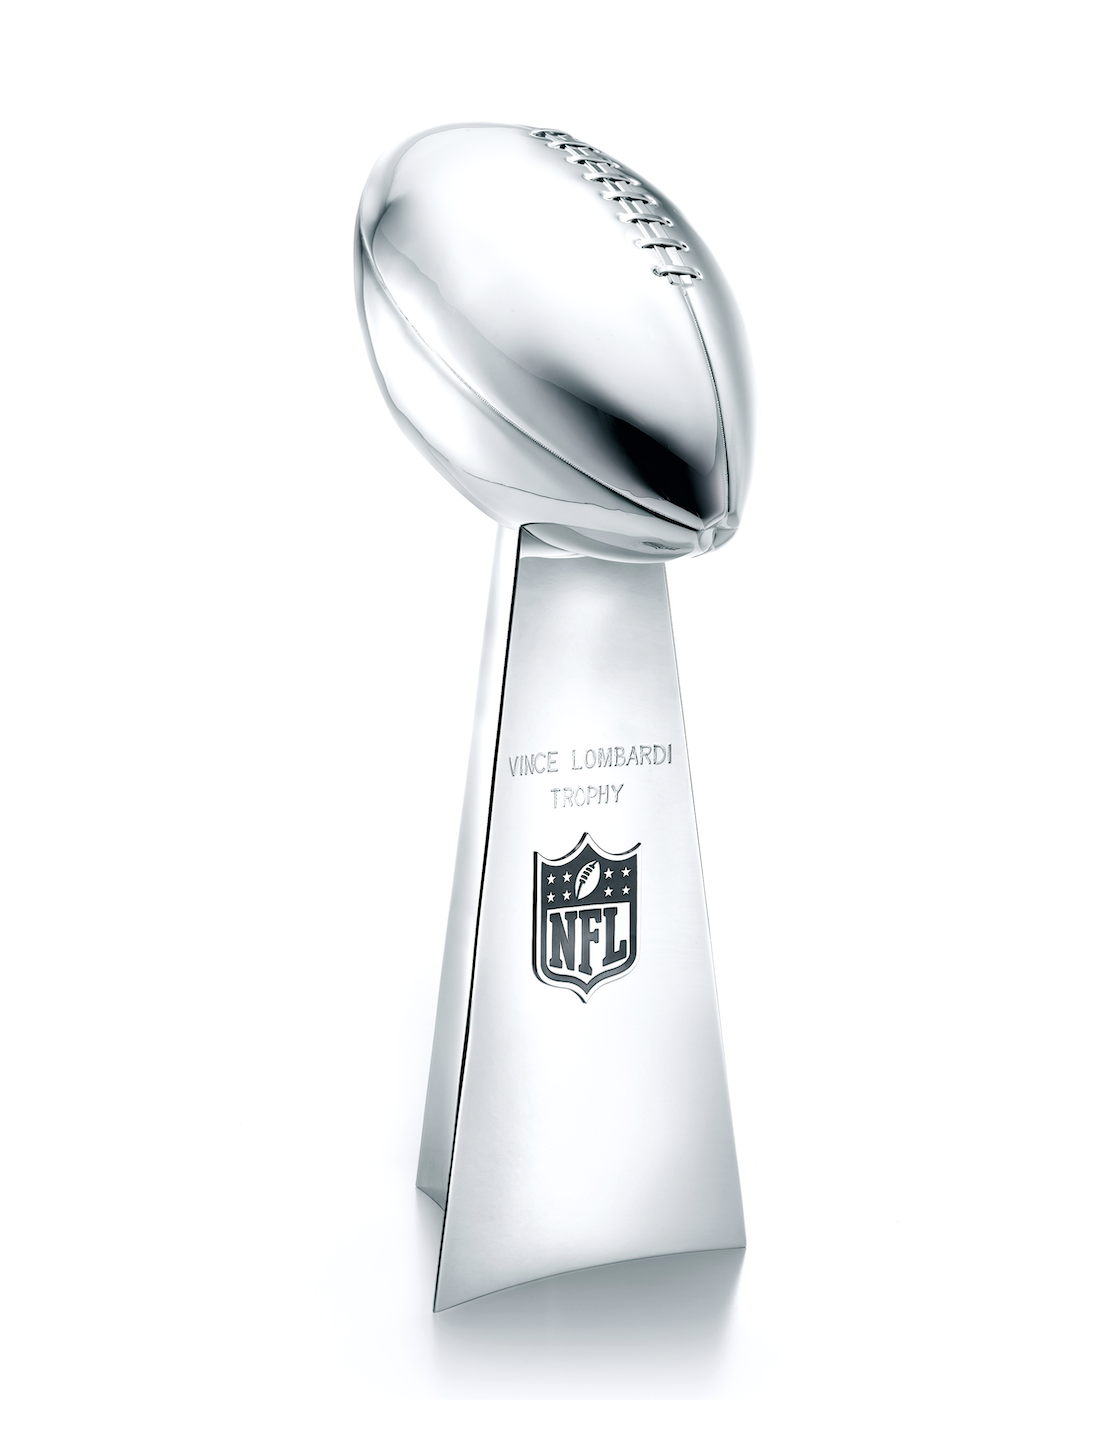 Super Bowl Trophy - Design History of Tiffany's Vince Lombardi Trophy